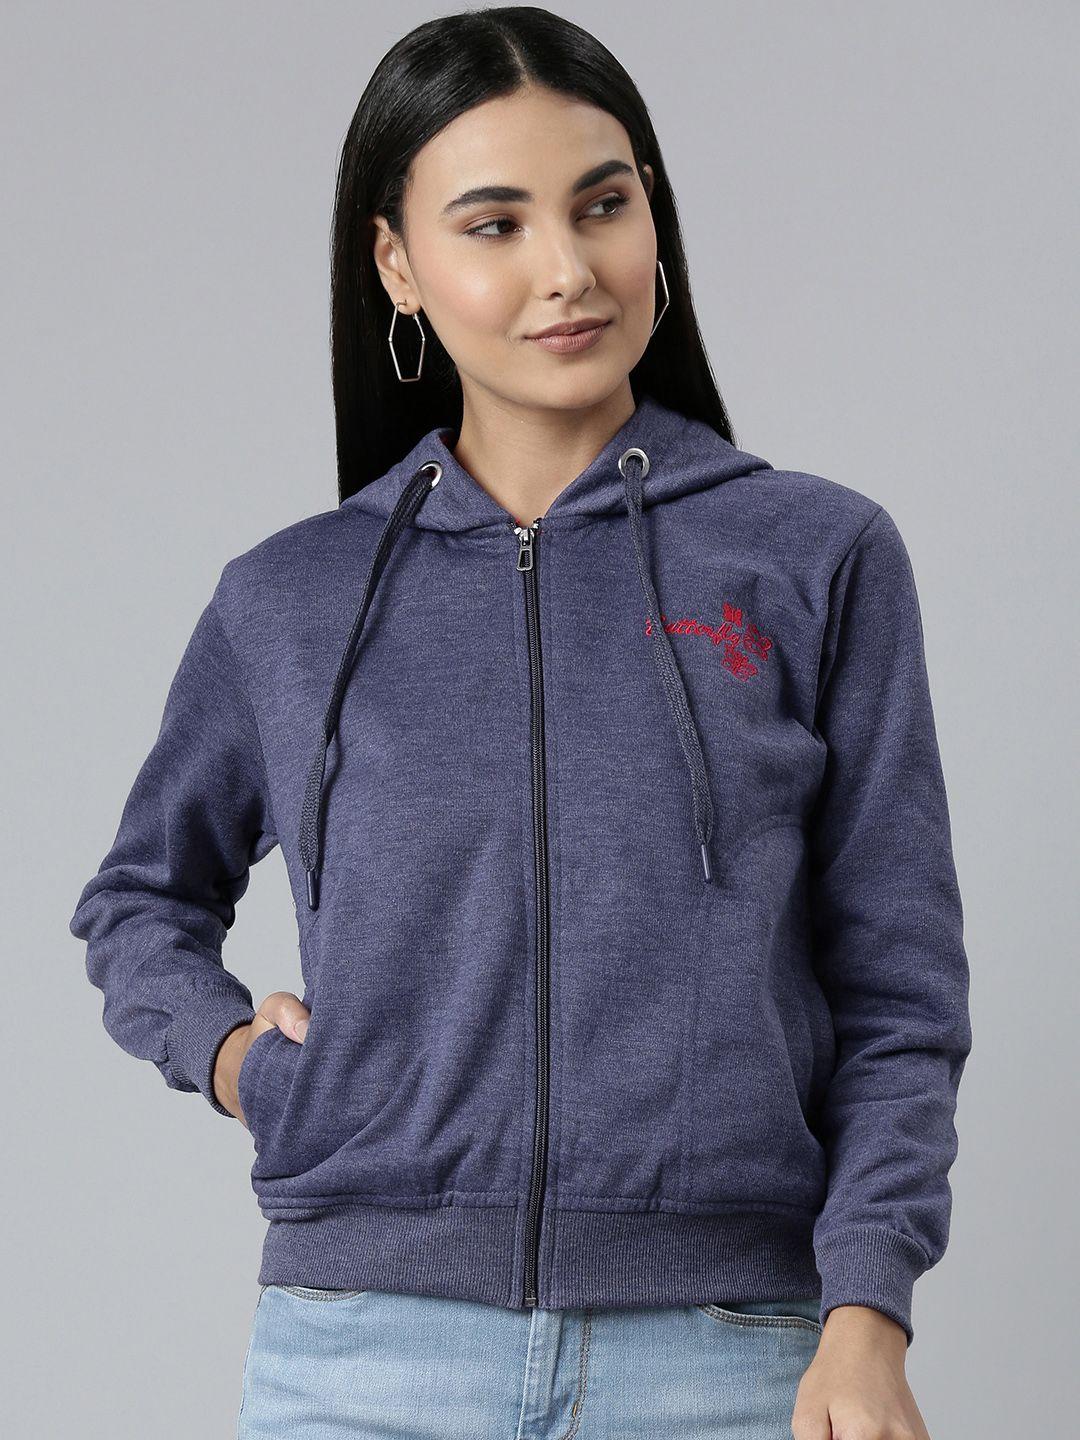 adbucks women navy blue embroidered hooded sweatshirt